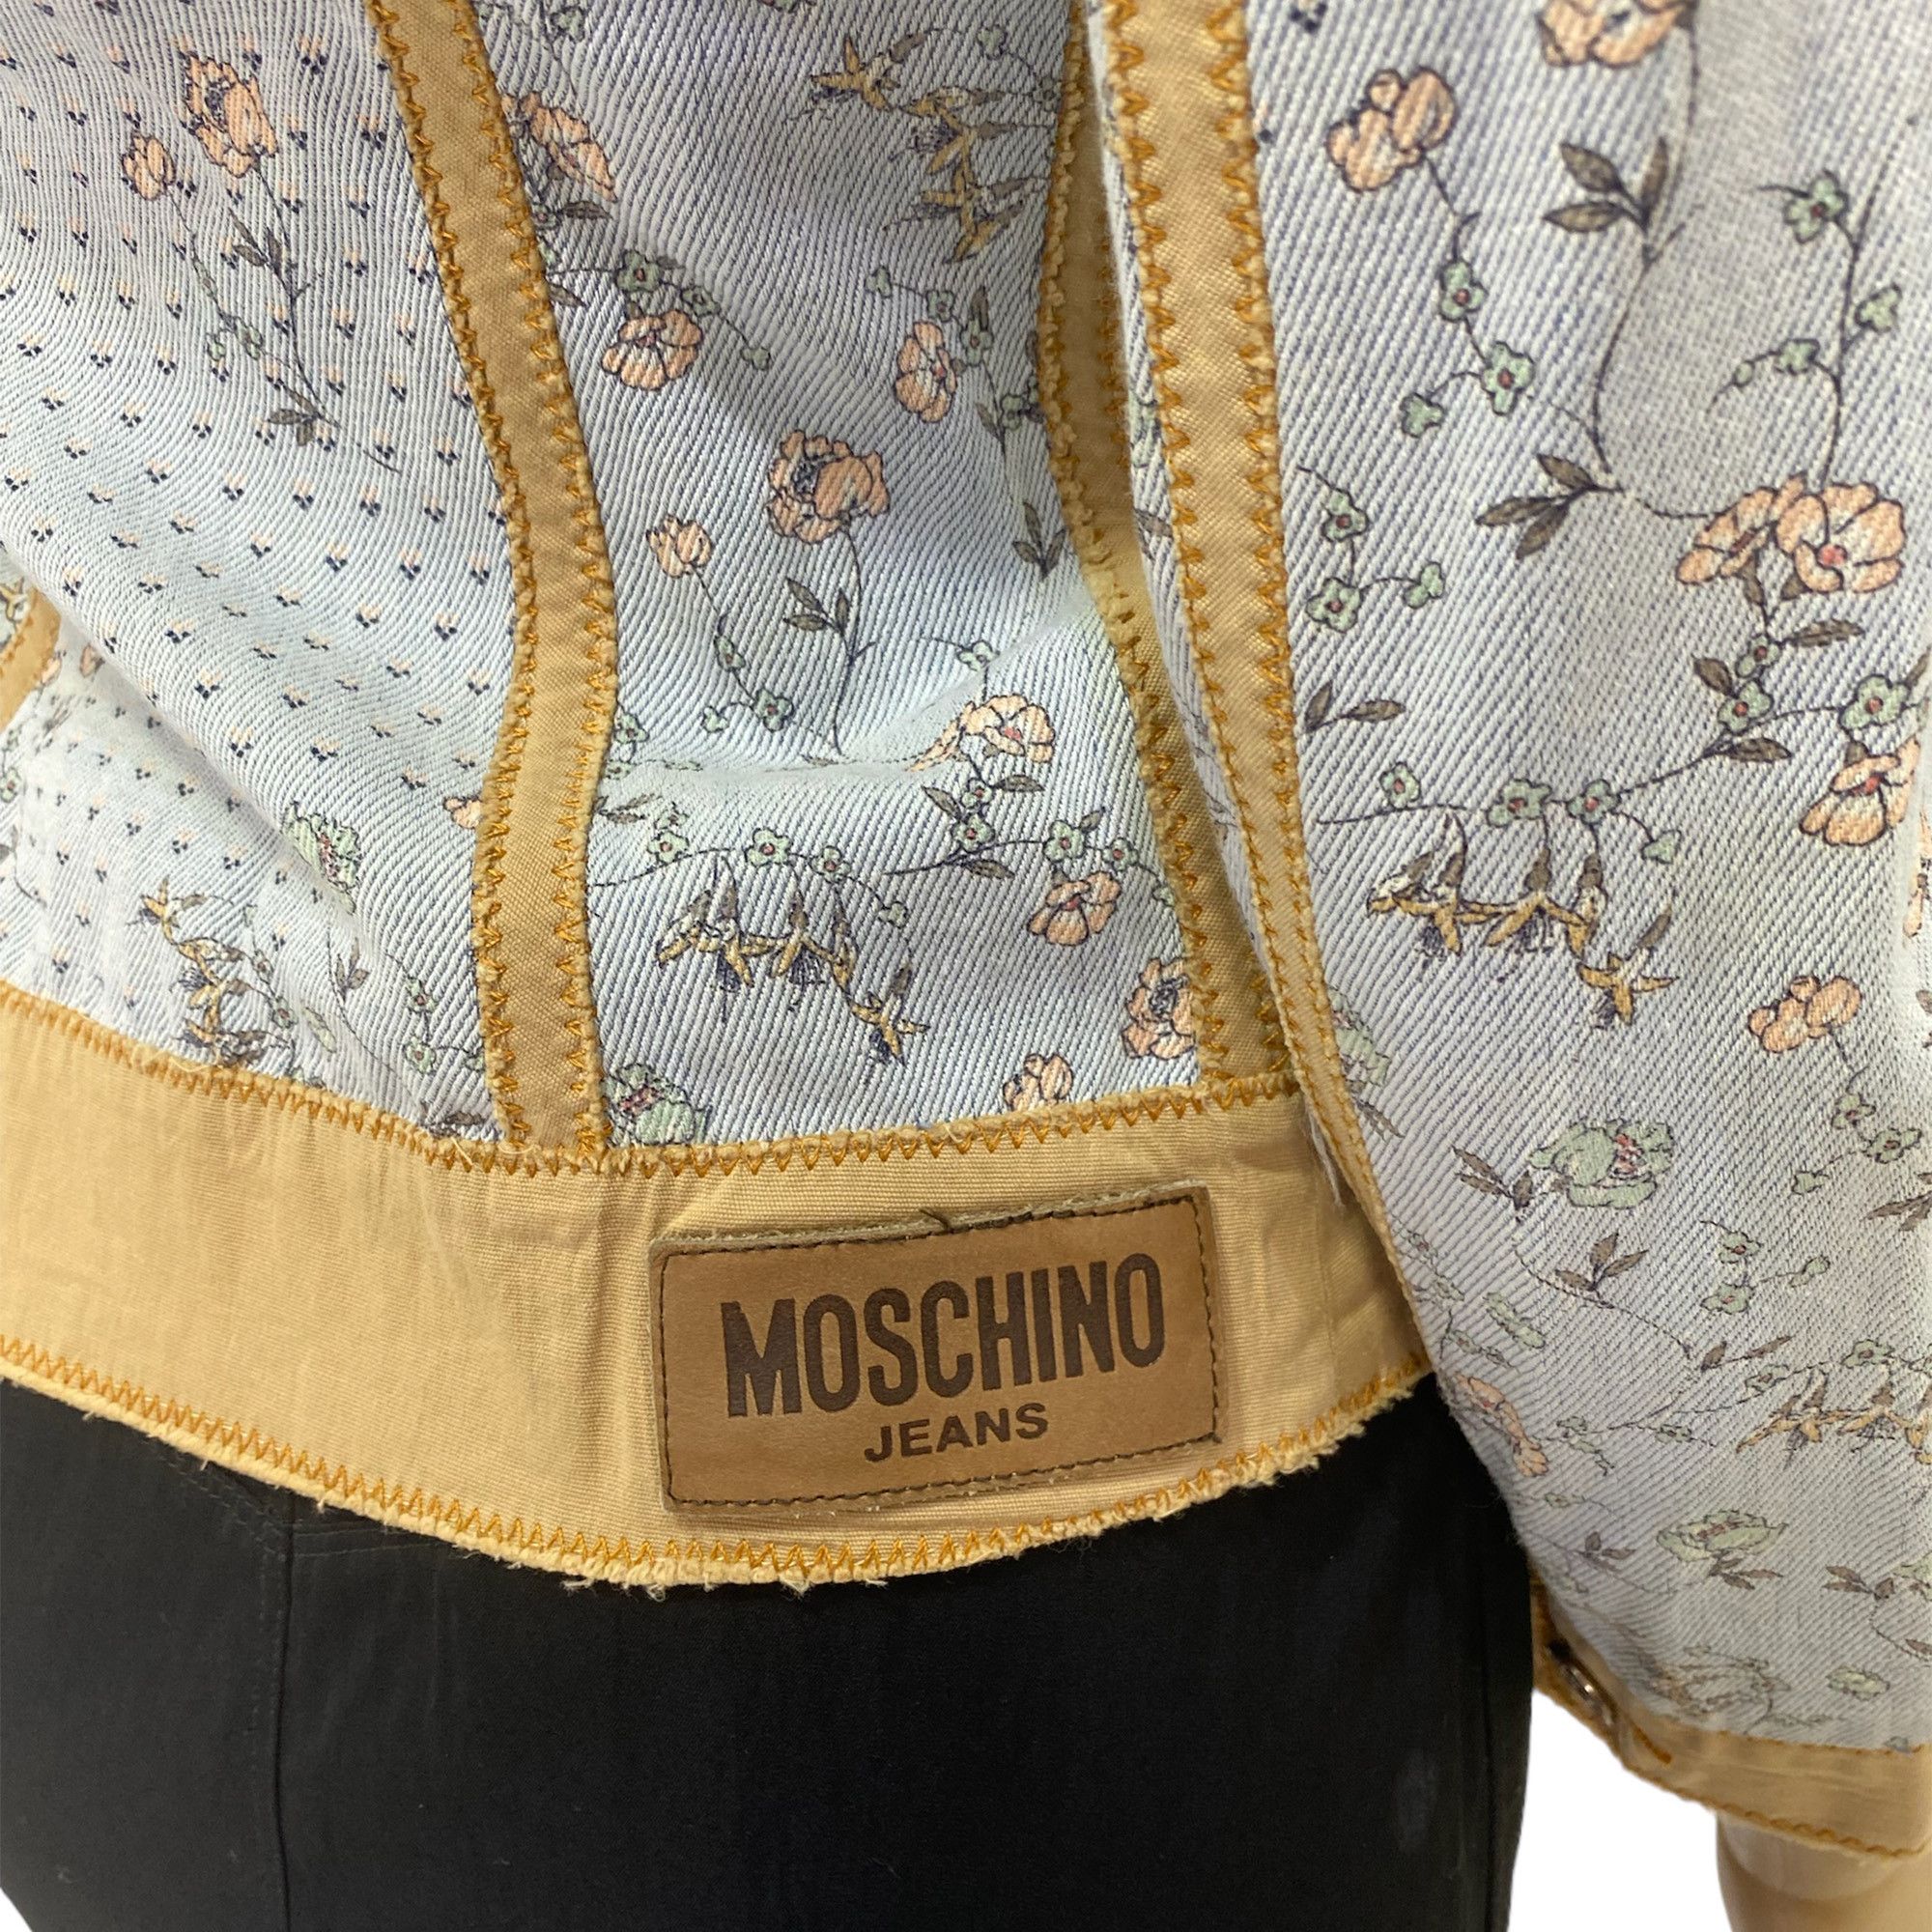 Vintage MOSCHINO Jeans Vintage Light Blue Brown Floral Prints Jacket Size M / US 6-8 / IT 42-44 - 7 Thumbnail